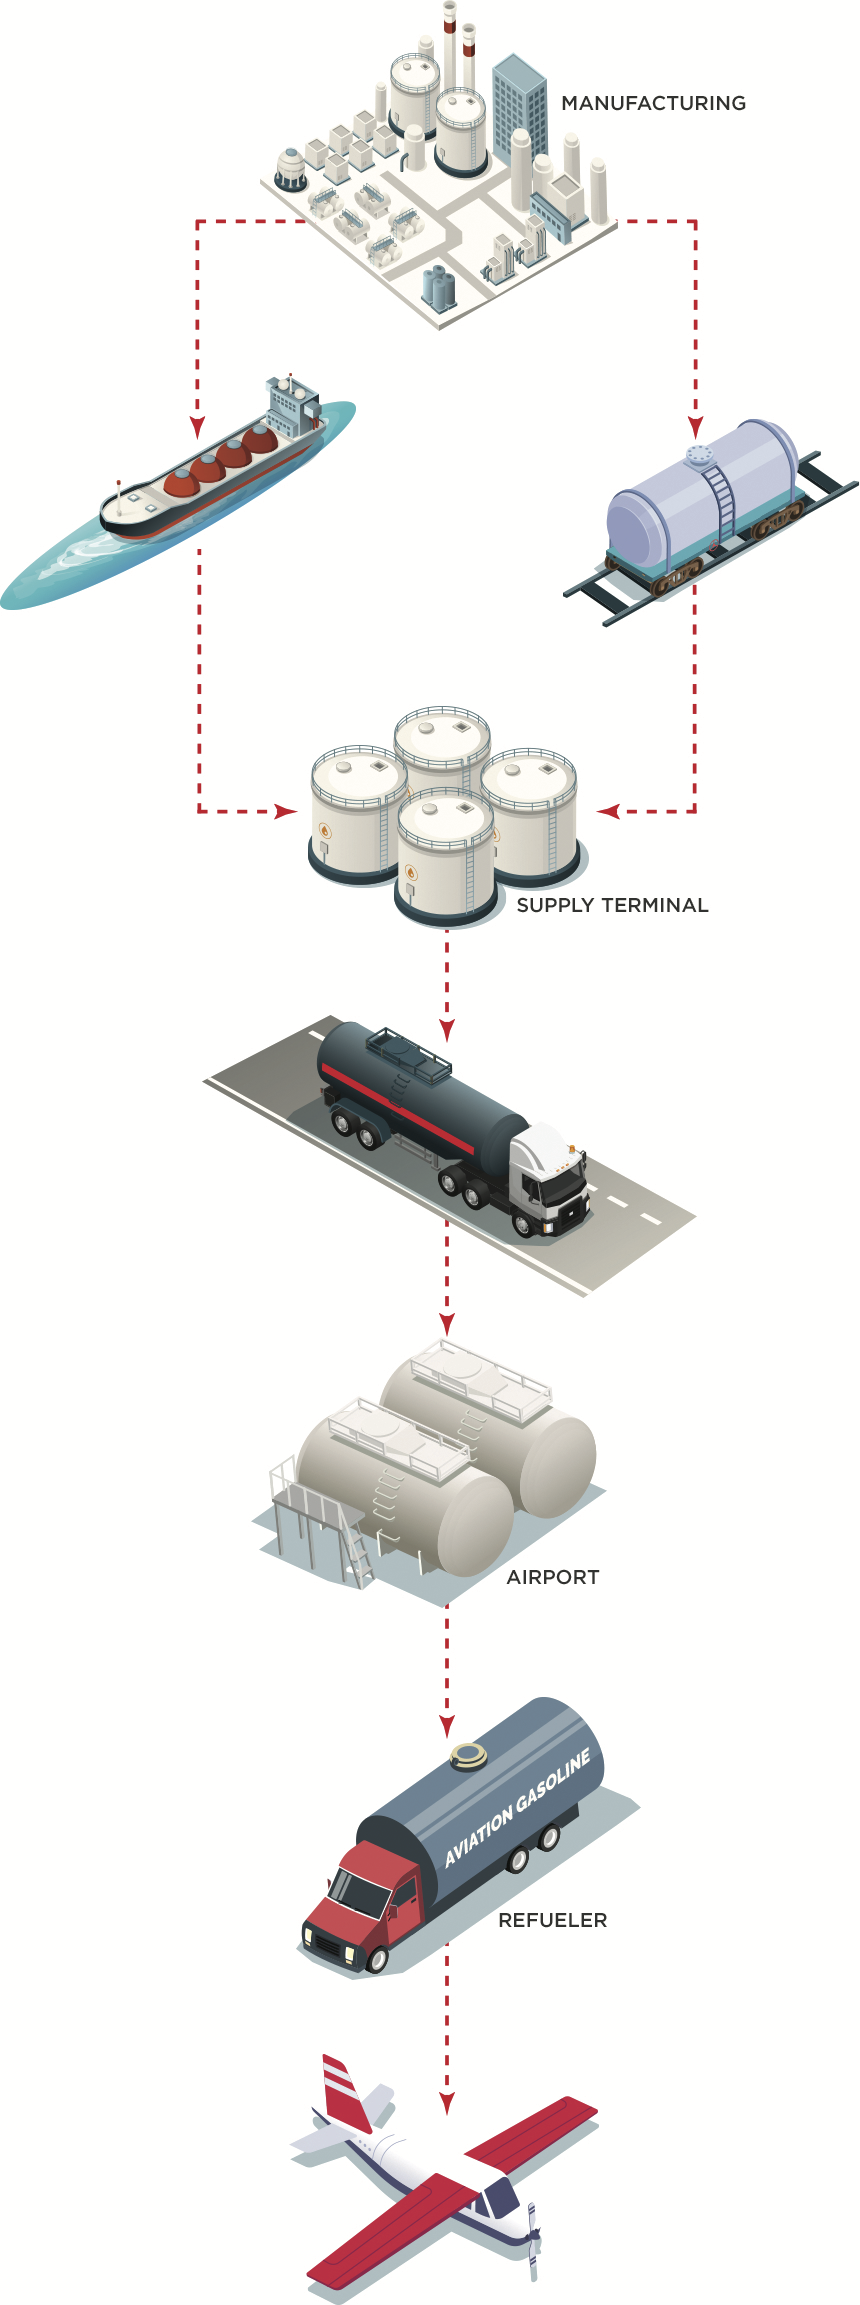 Aviation Fuel Distribution System